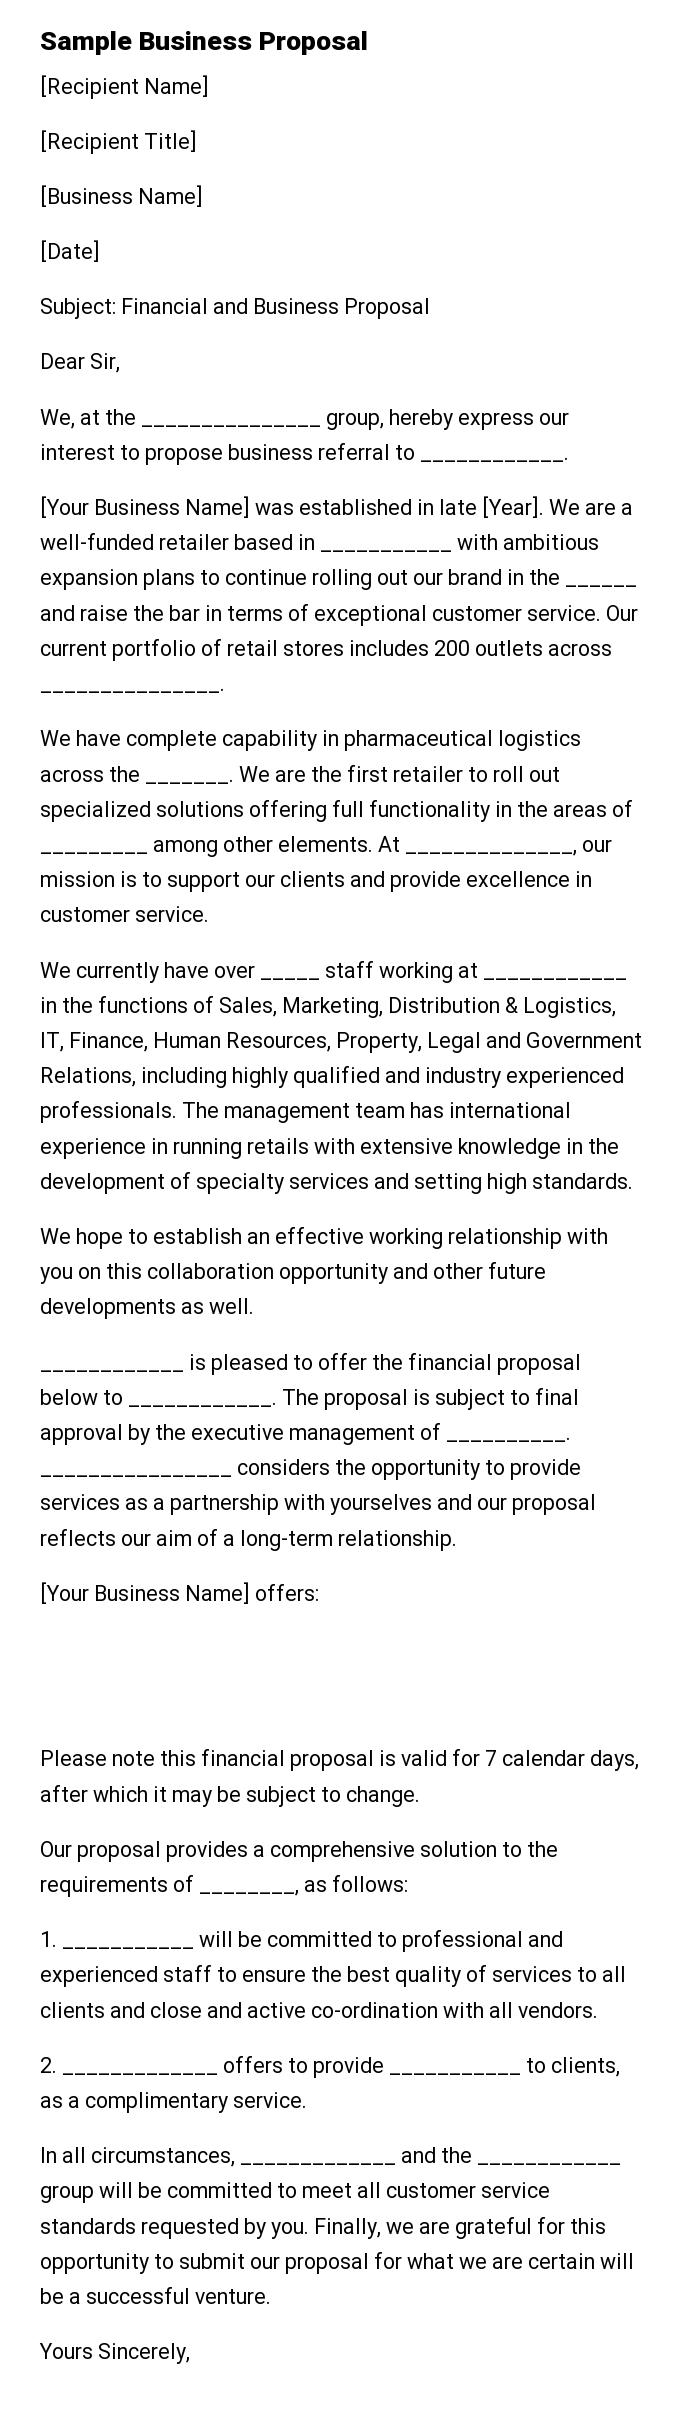 Sample Business Proposal